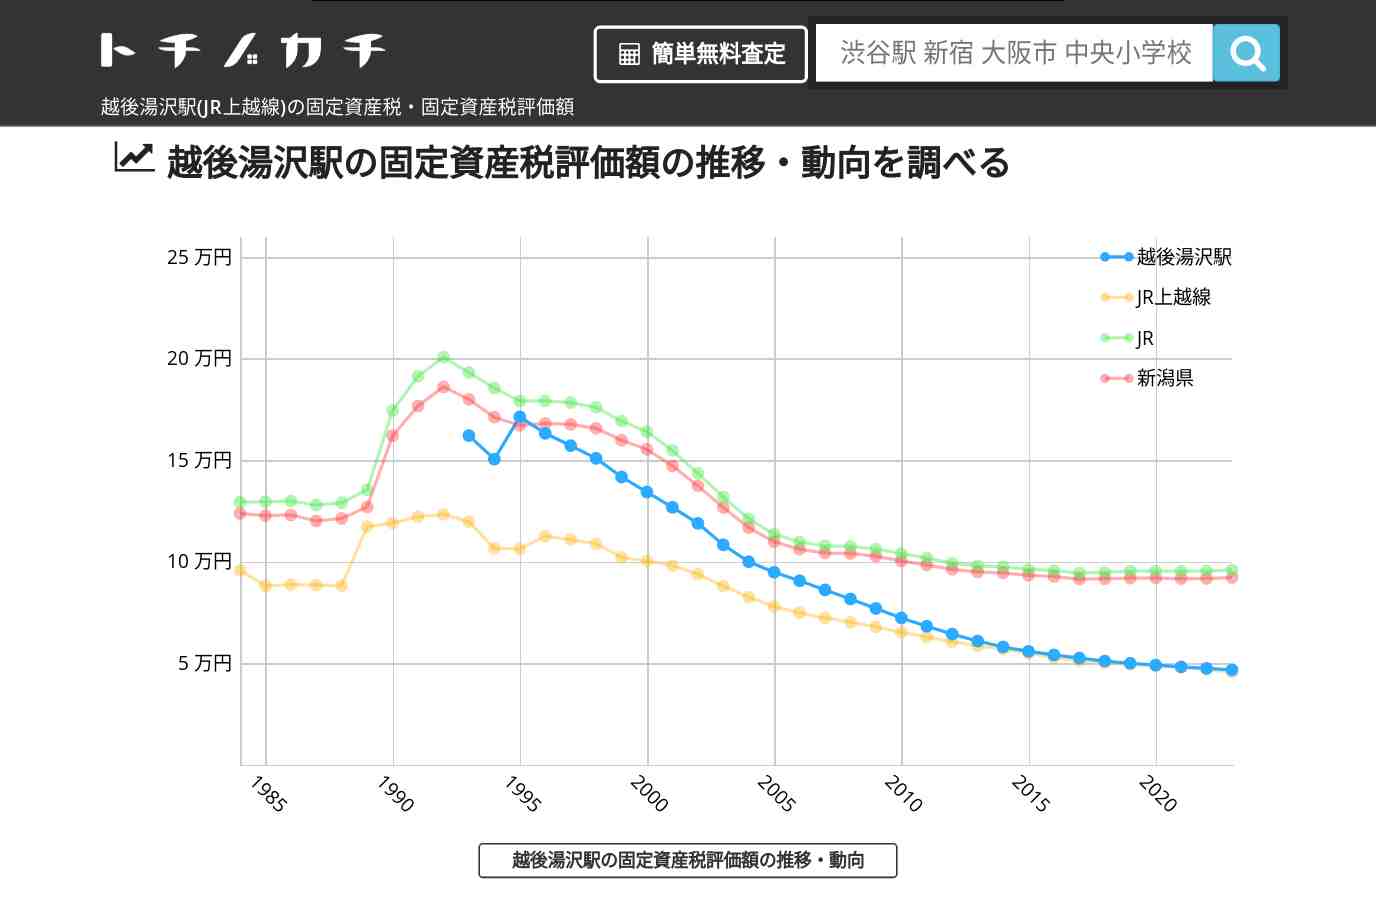 越後湯沢駅(JR上越線)の固定資産税・固定資産税評価額 | トチノカチ